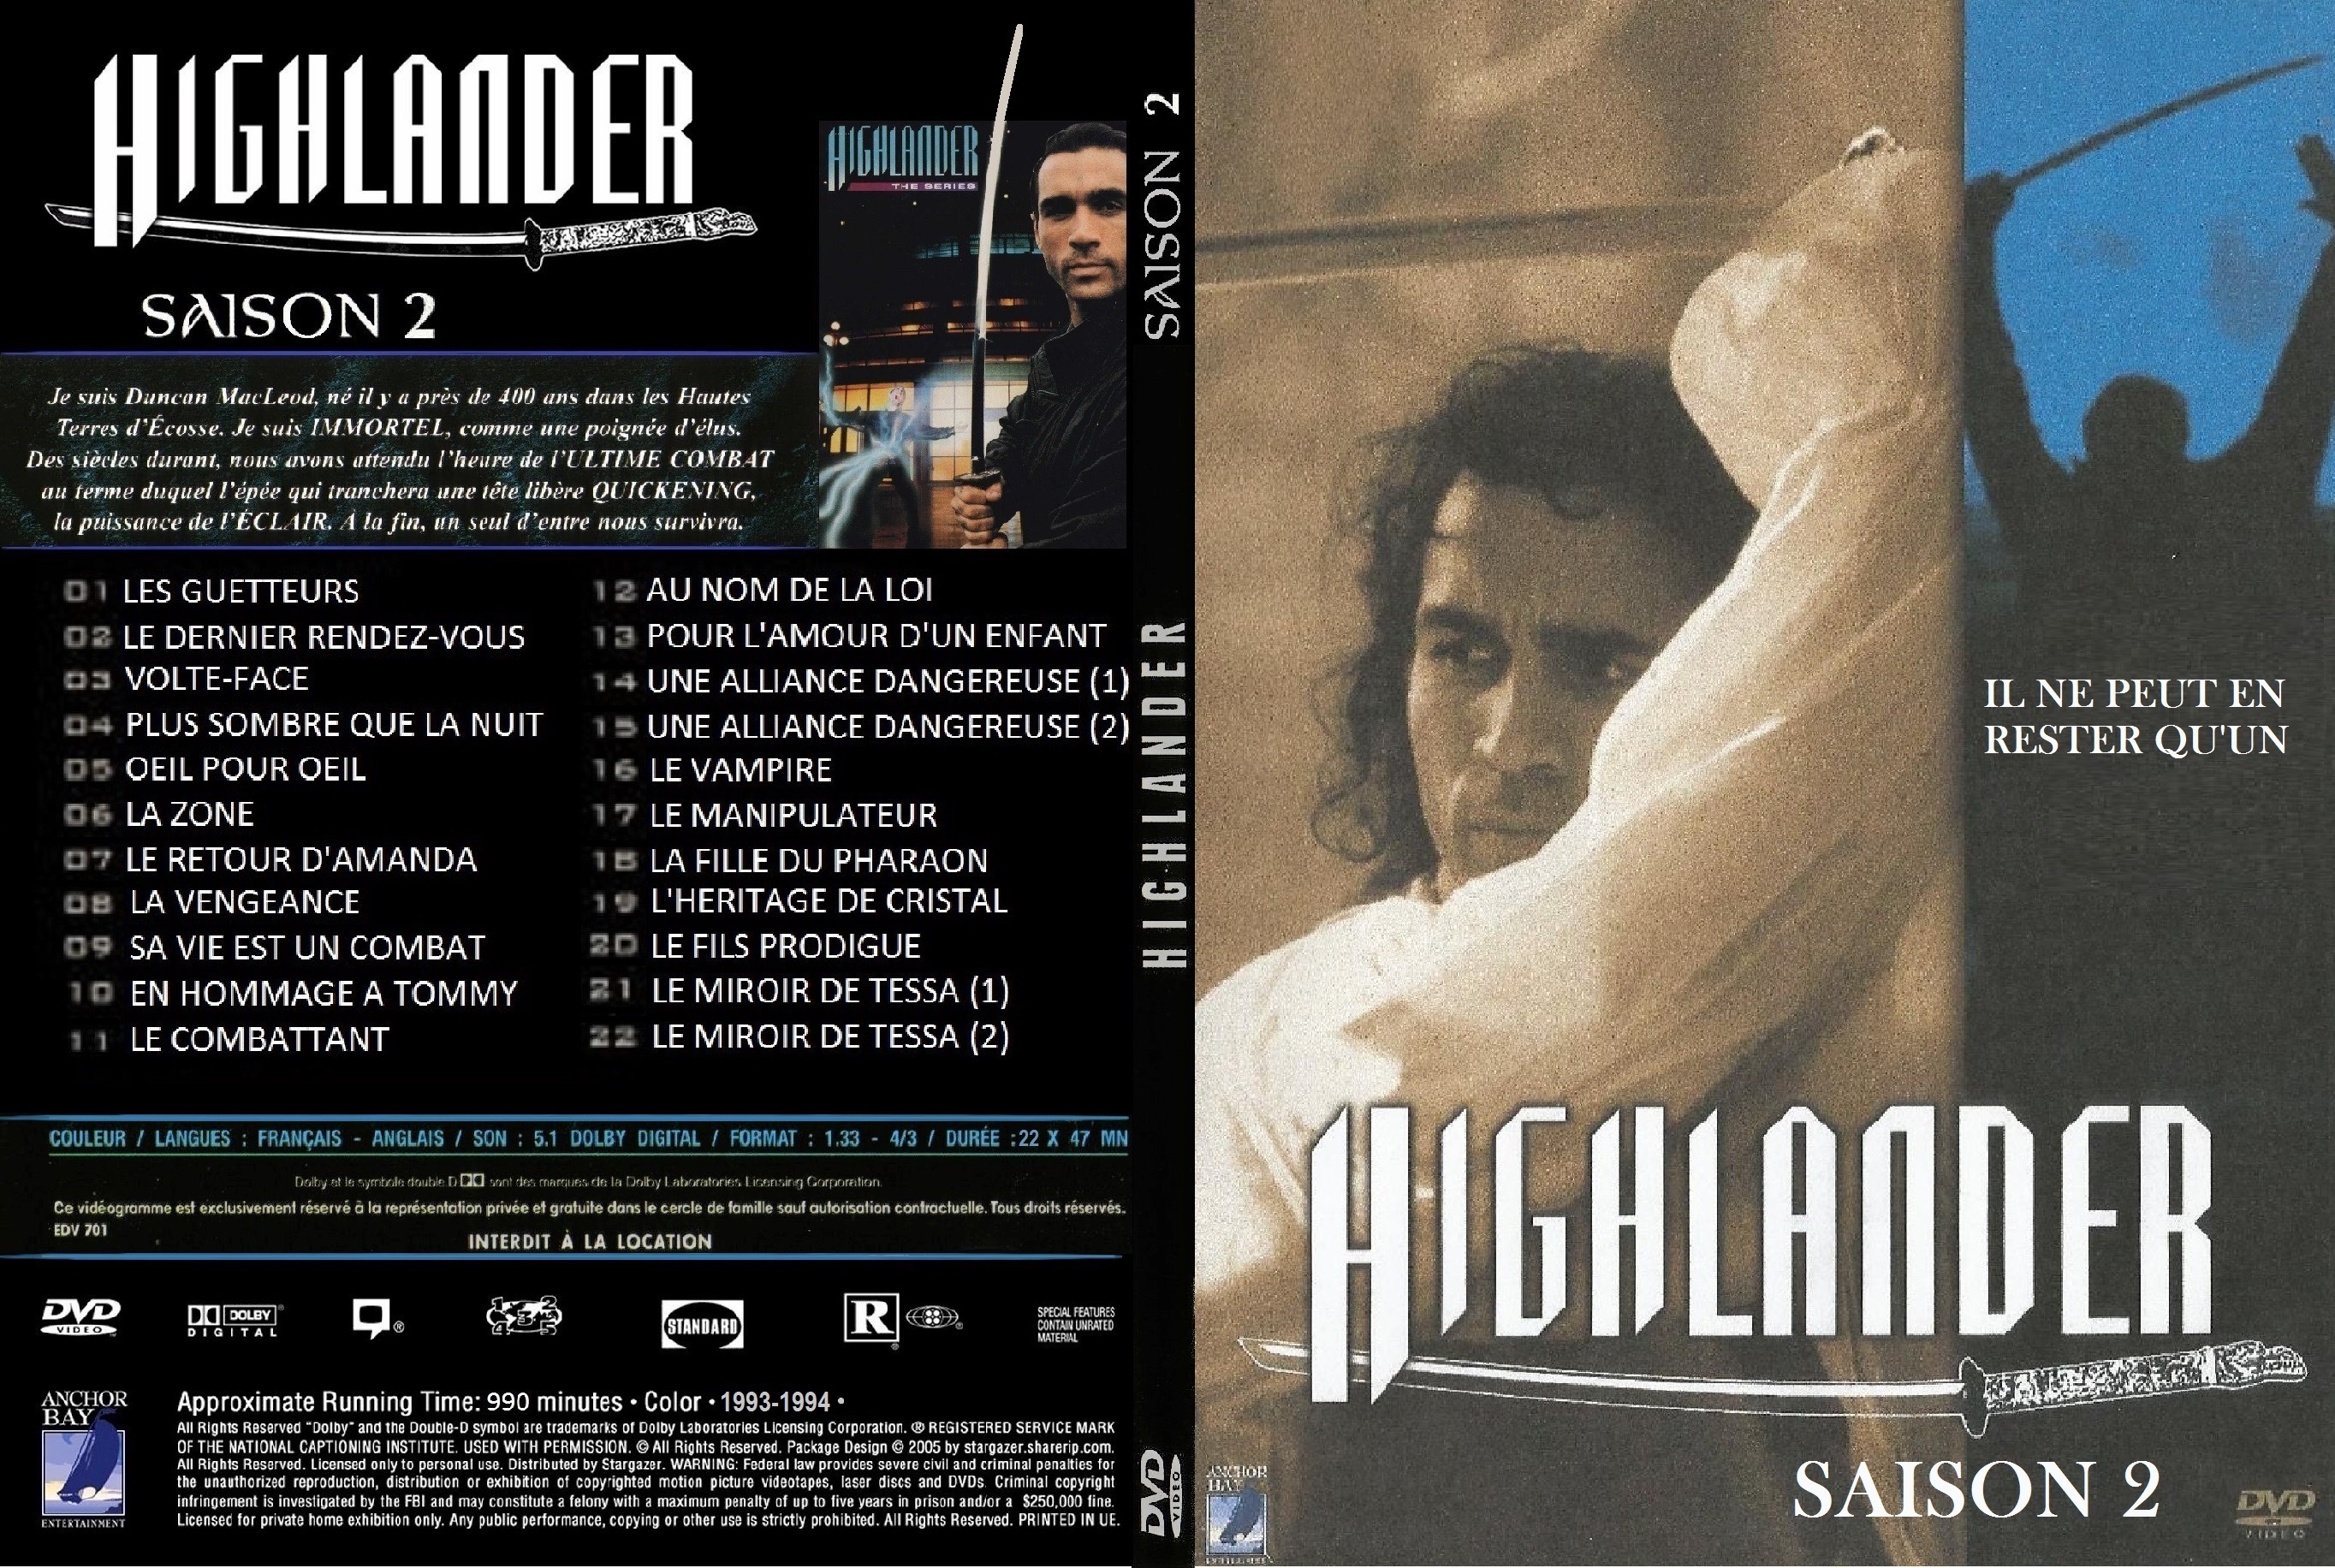 Jaquette DVD Highlander saison 2 SLIM custom